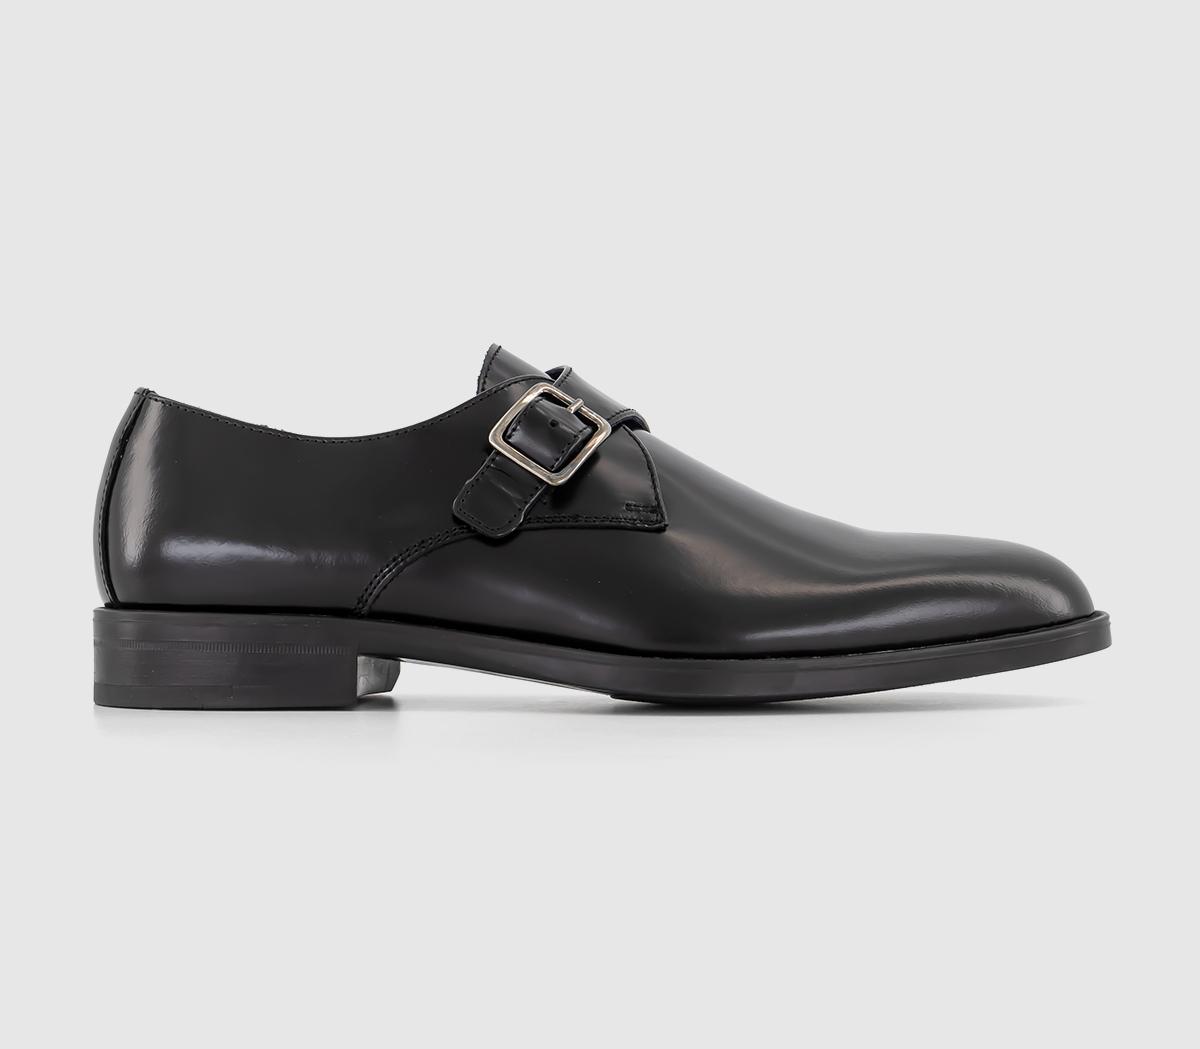 Pierre Single Strap Monk Shoes Black Leather